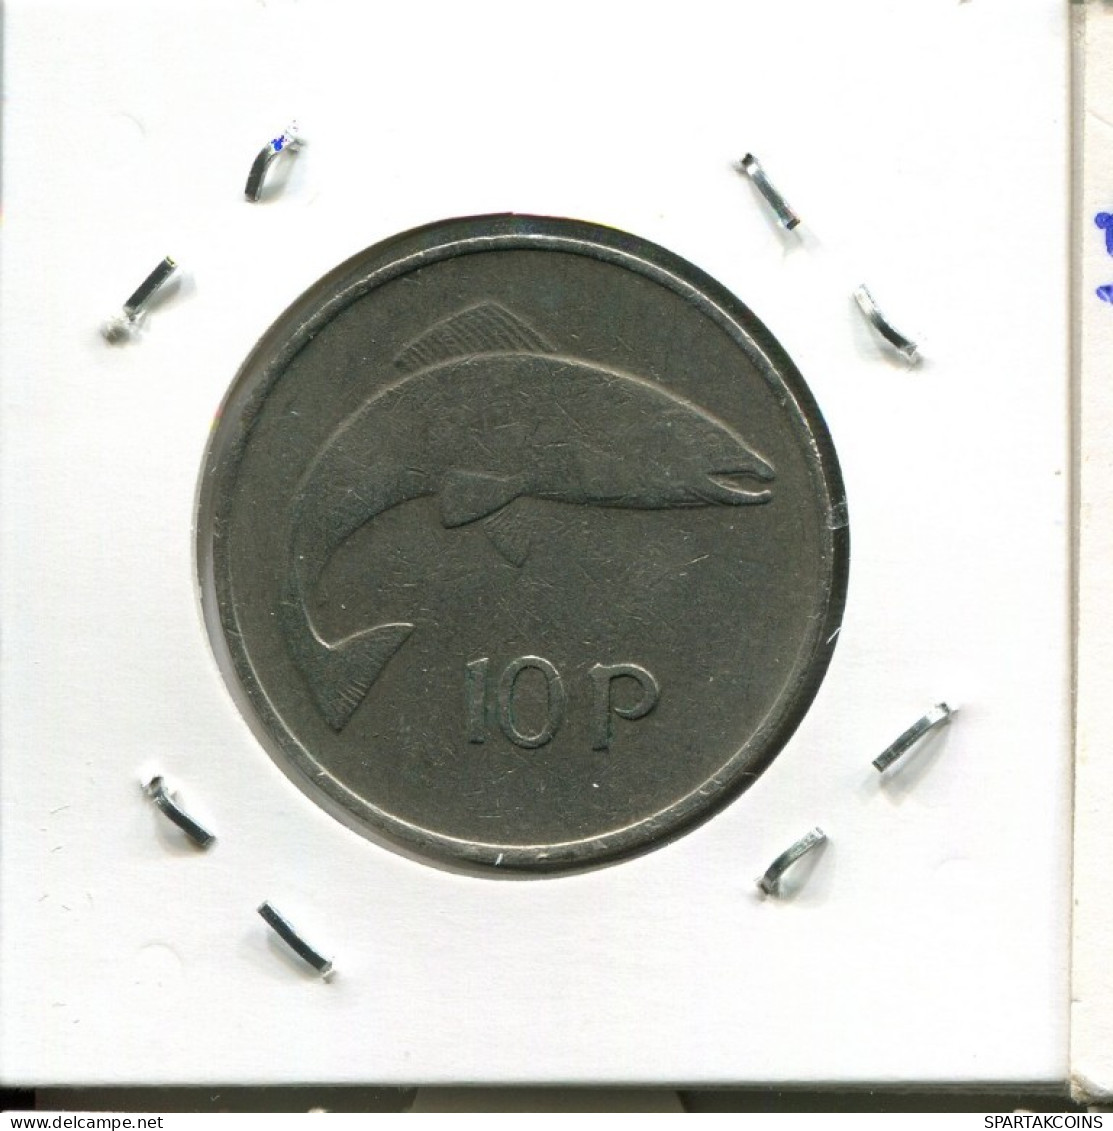 10 PENCE 1976 IRLANDA IRELAND Moneda #AN608.E.A - Ierland